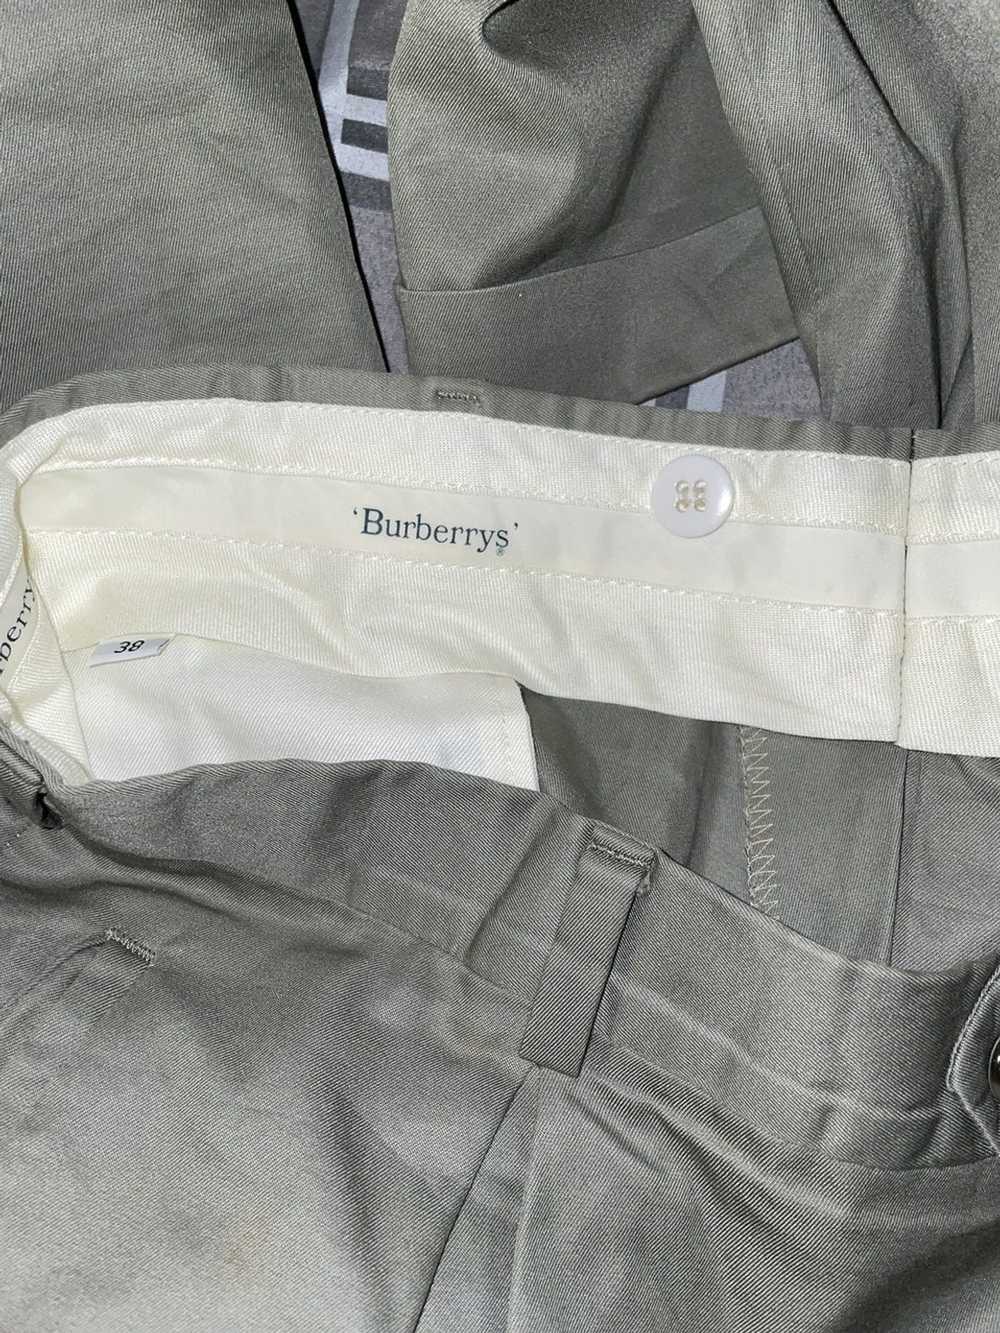 Burberry Burberrys slacks - image 3